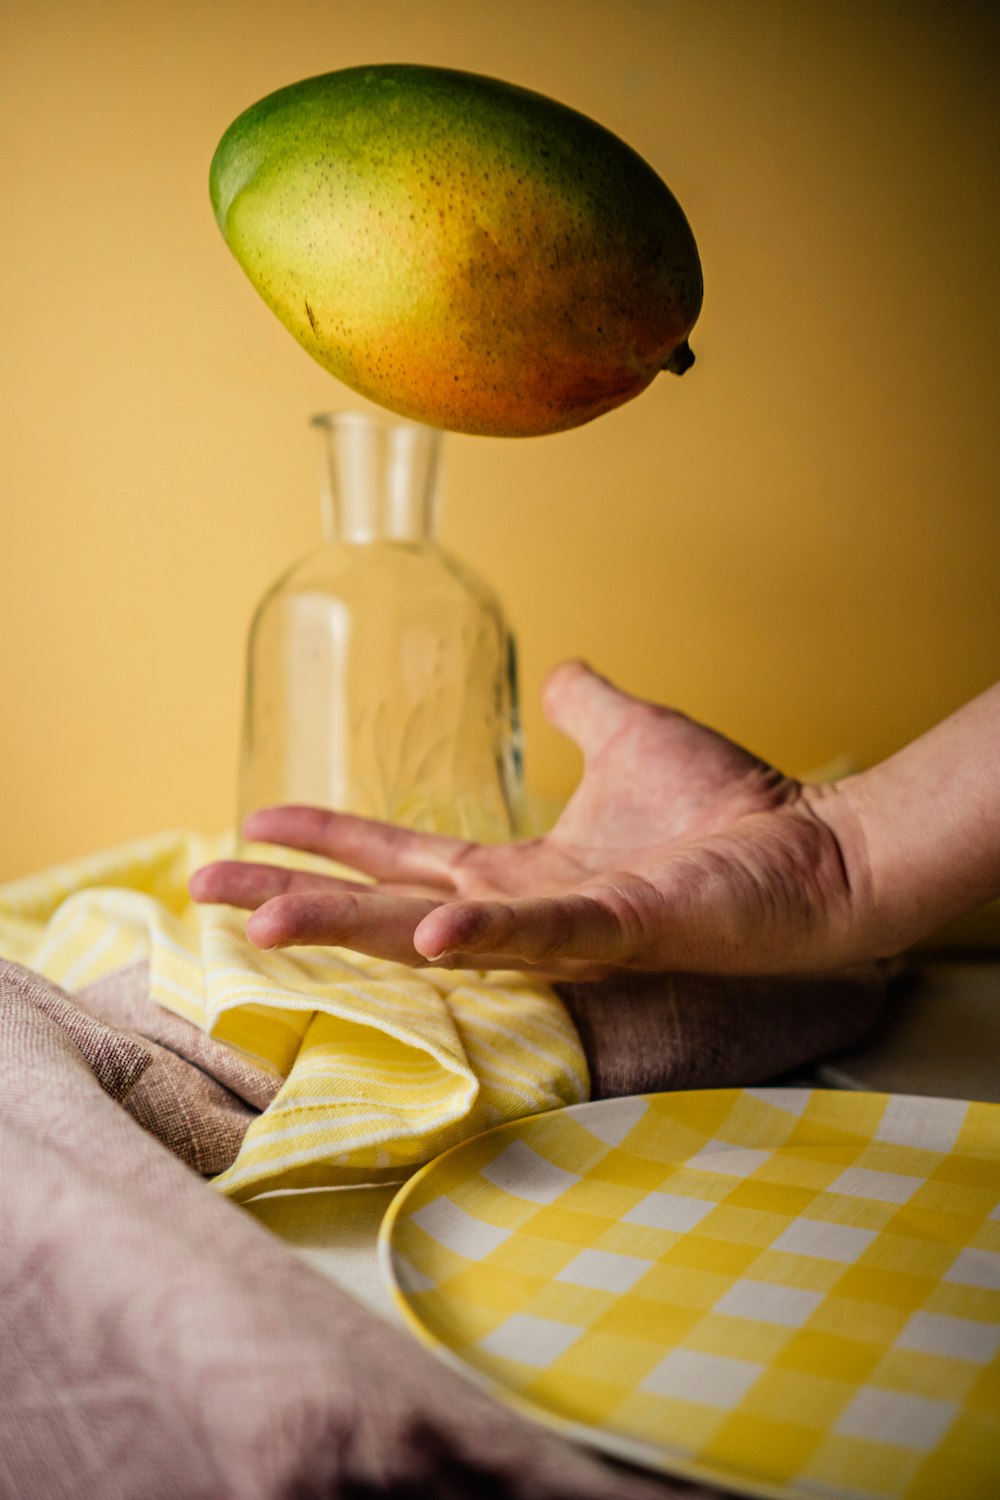 Persona sosteniendo una fruta de manzana amarilla